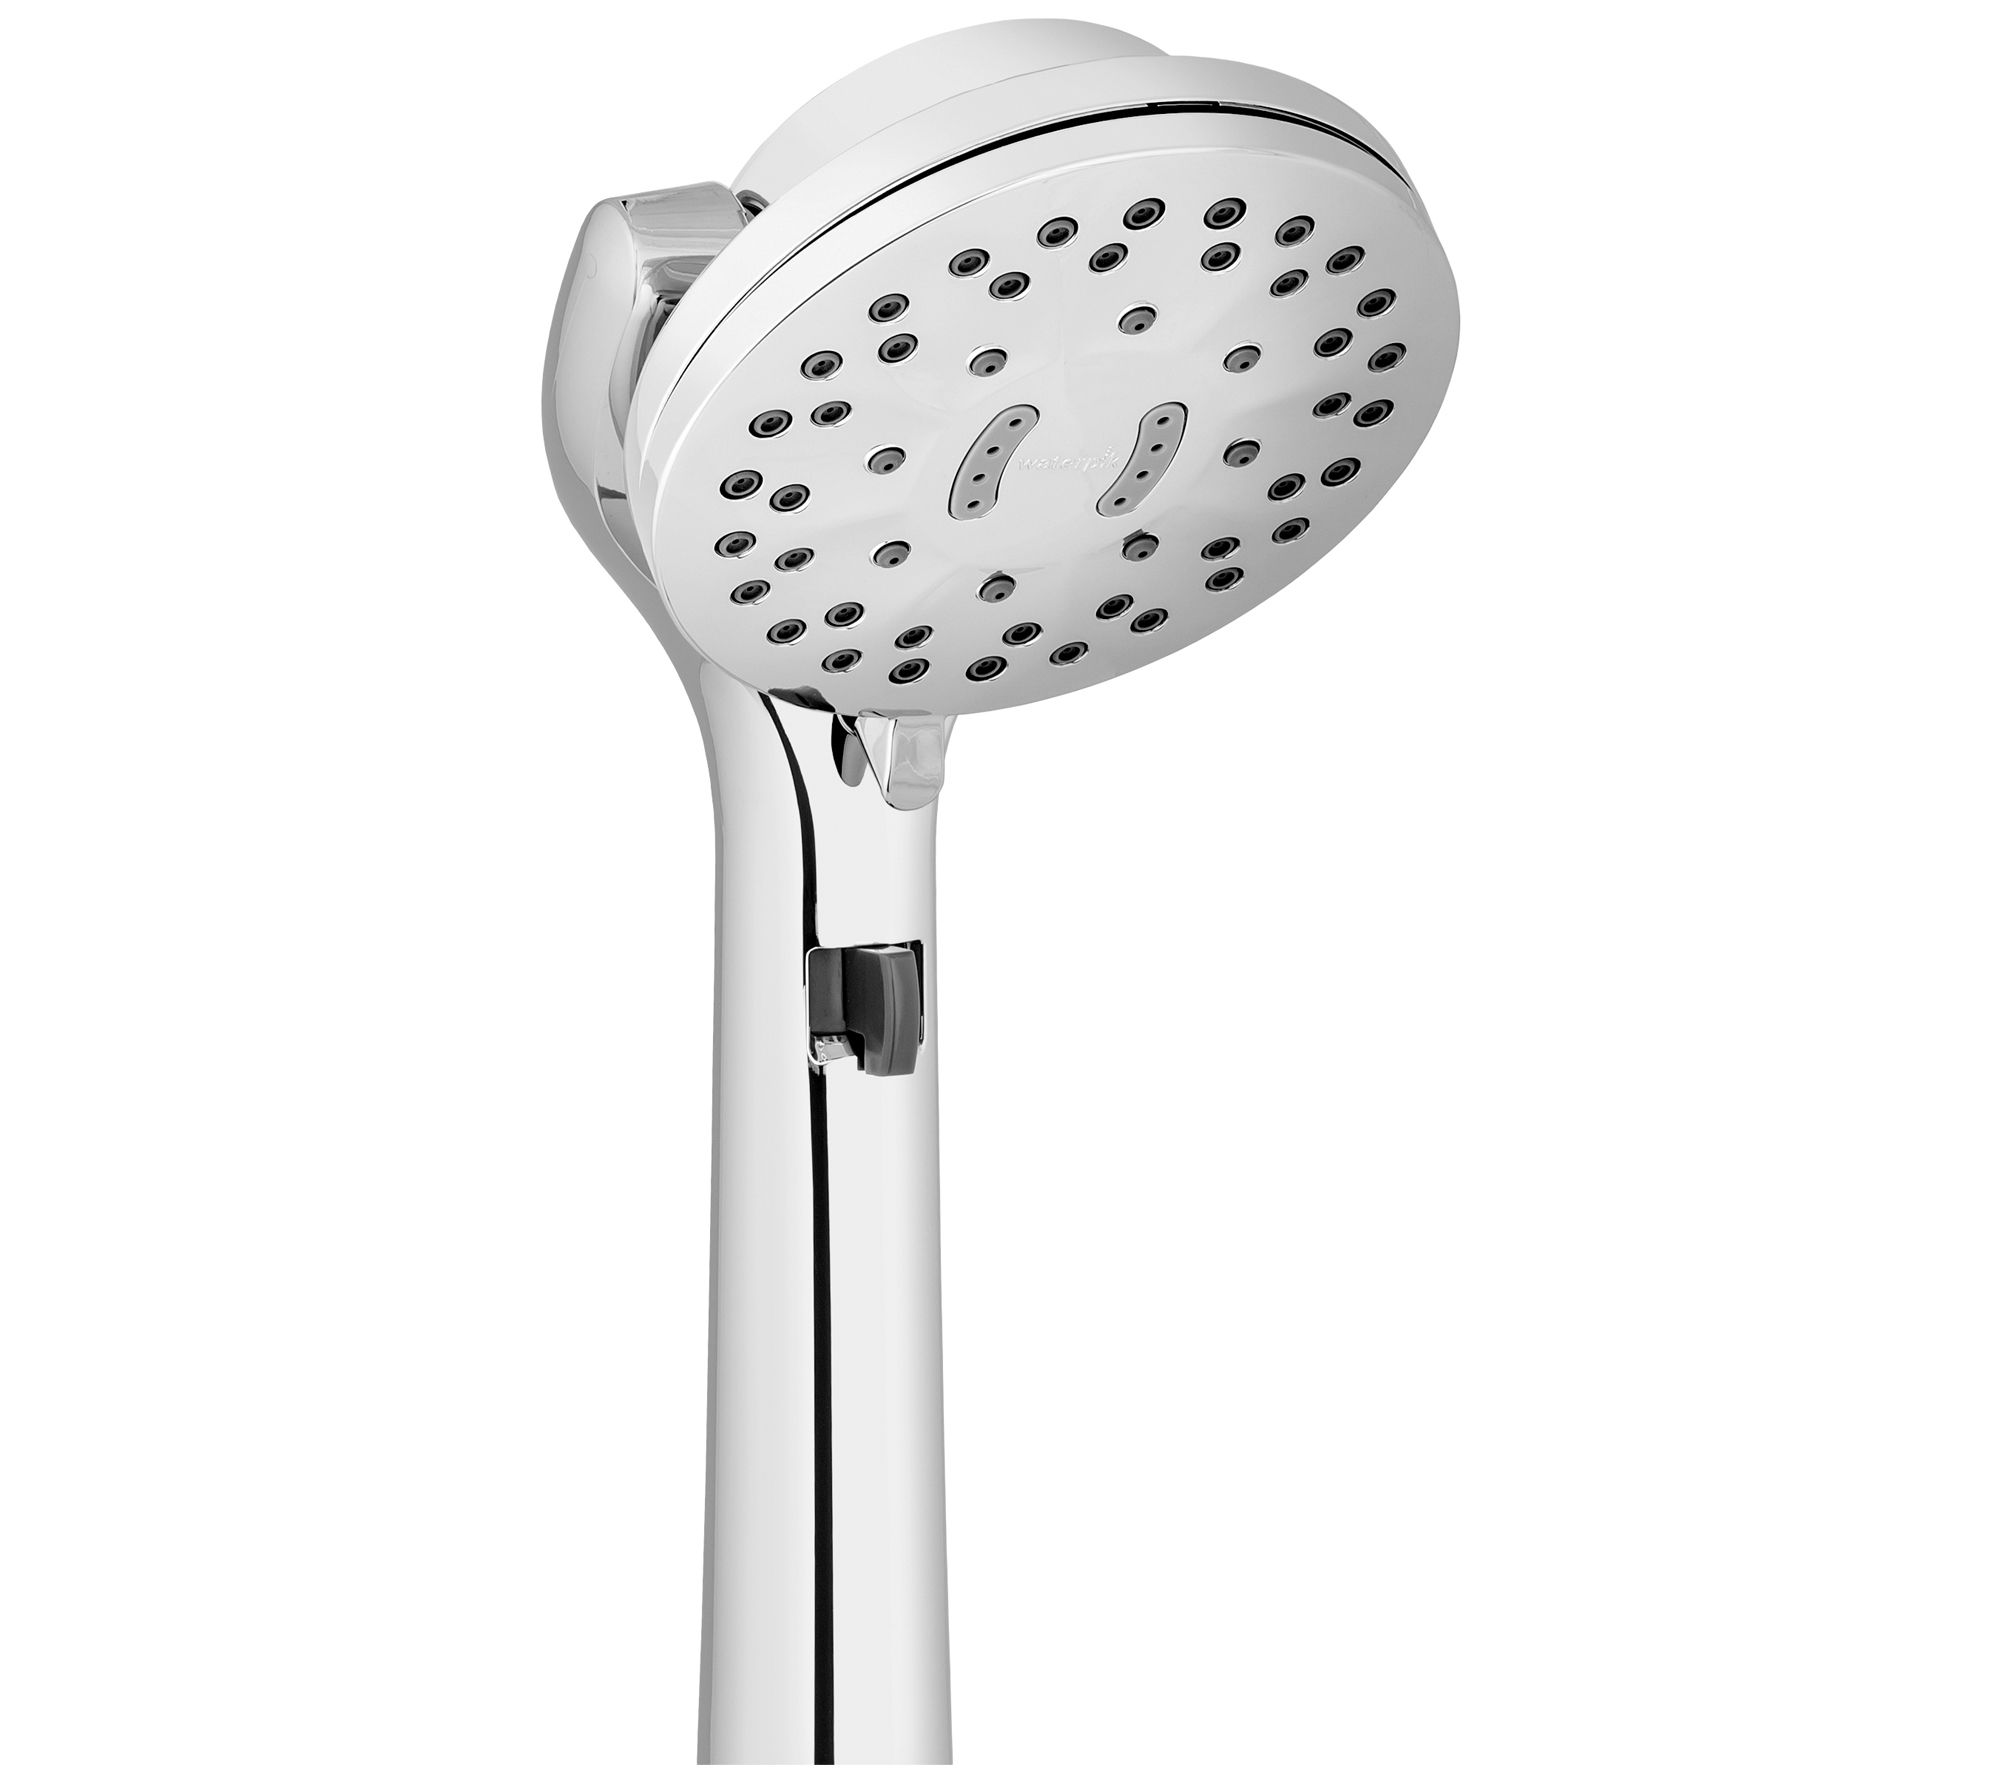 Waterpik ShowerCare Pivoting 5 Spray Setting Shower Head - QVC.com